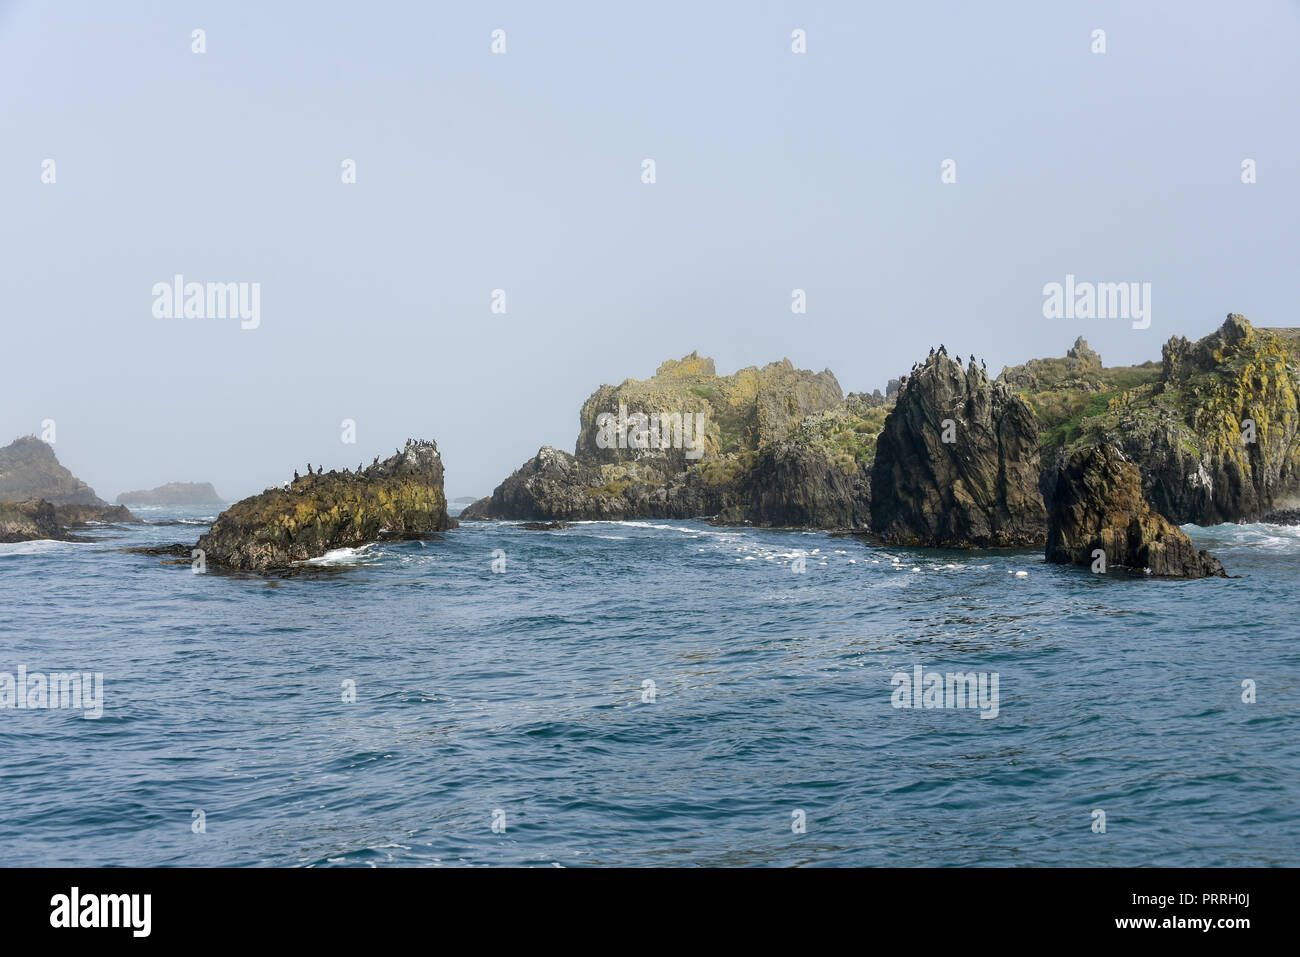 Natural Heritage Site Islotes de Puñihuil, bizarre rock formations, bird rock, Bahia Puñihuil, Isla de Chiloé, Chile Stock Photo